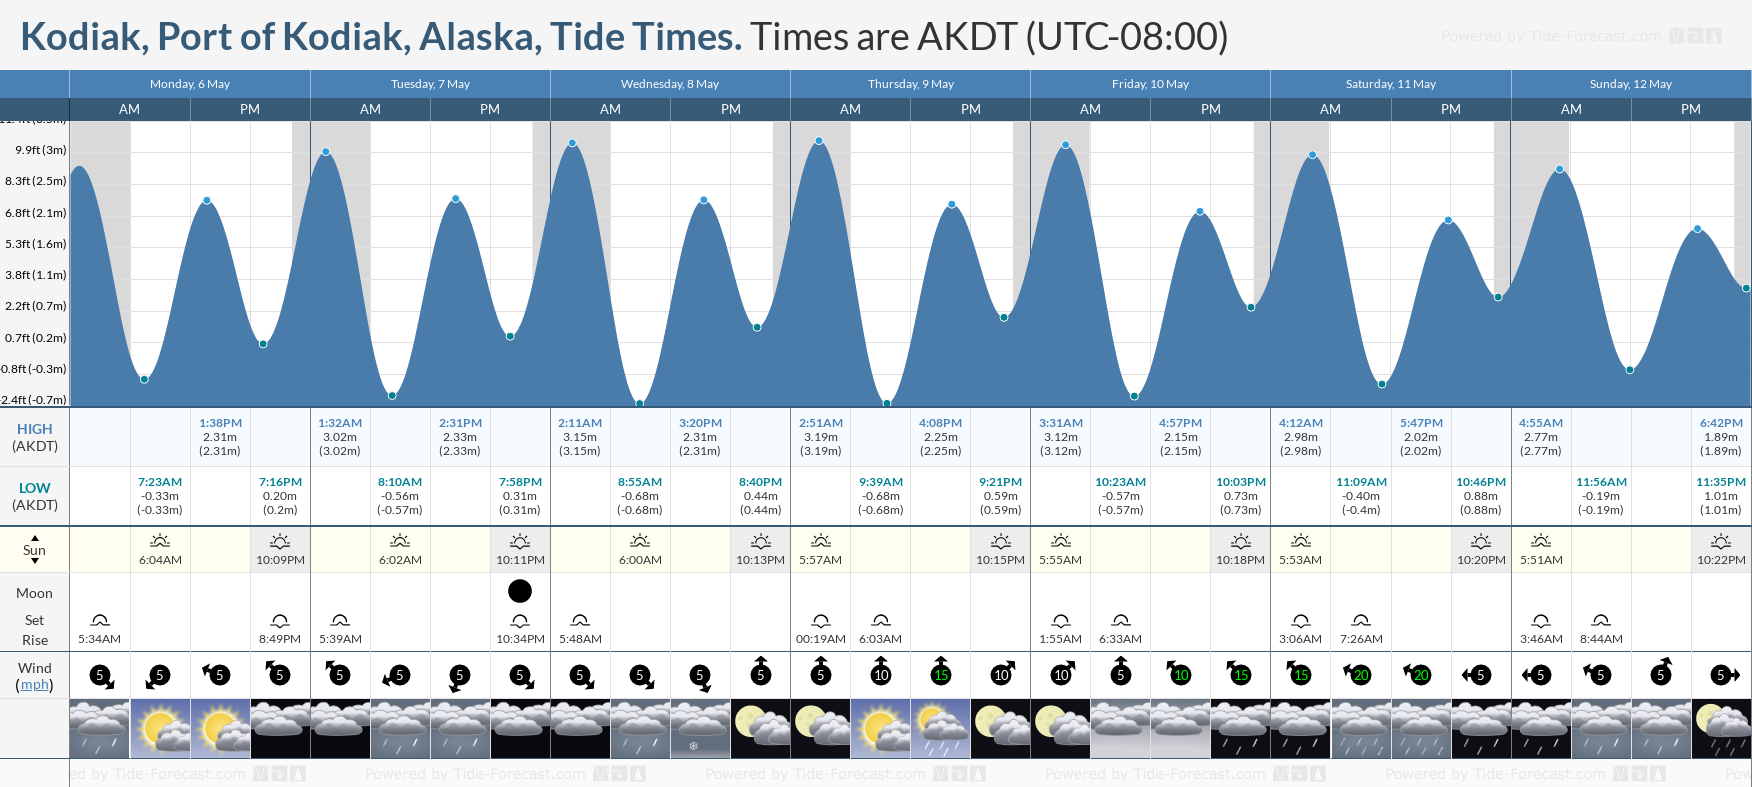 Kodiak, Port of Kodiak, Alaska Tide Chart including high and low tide times for the next 7 days